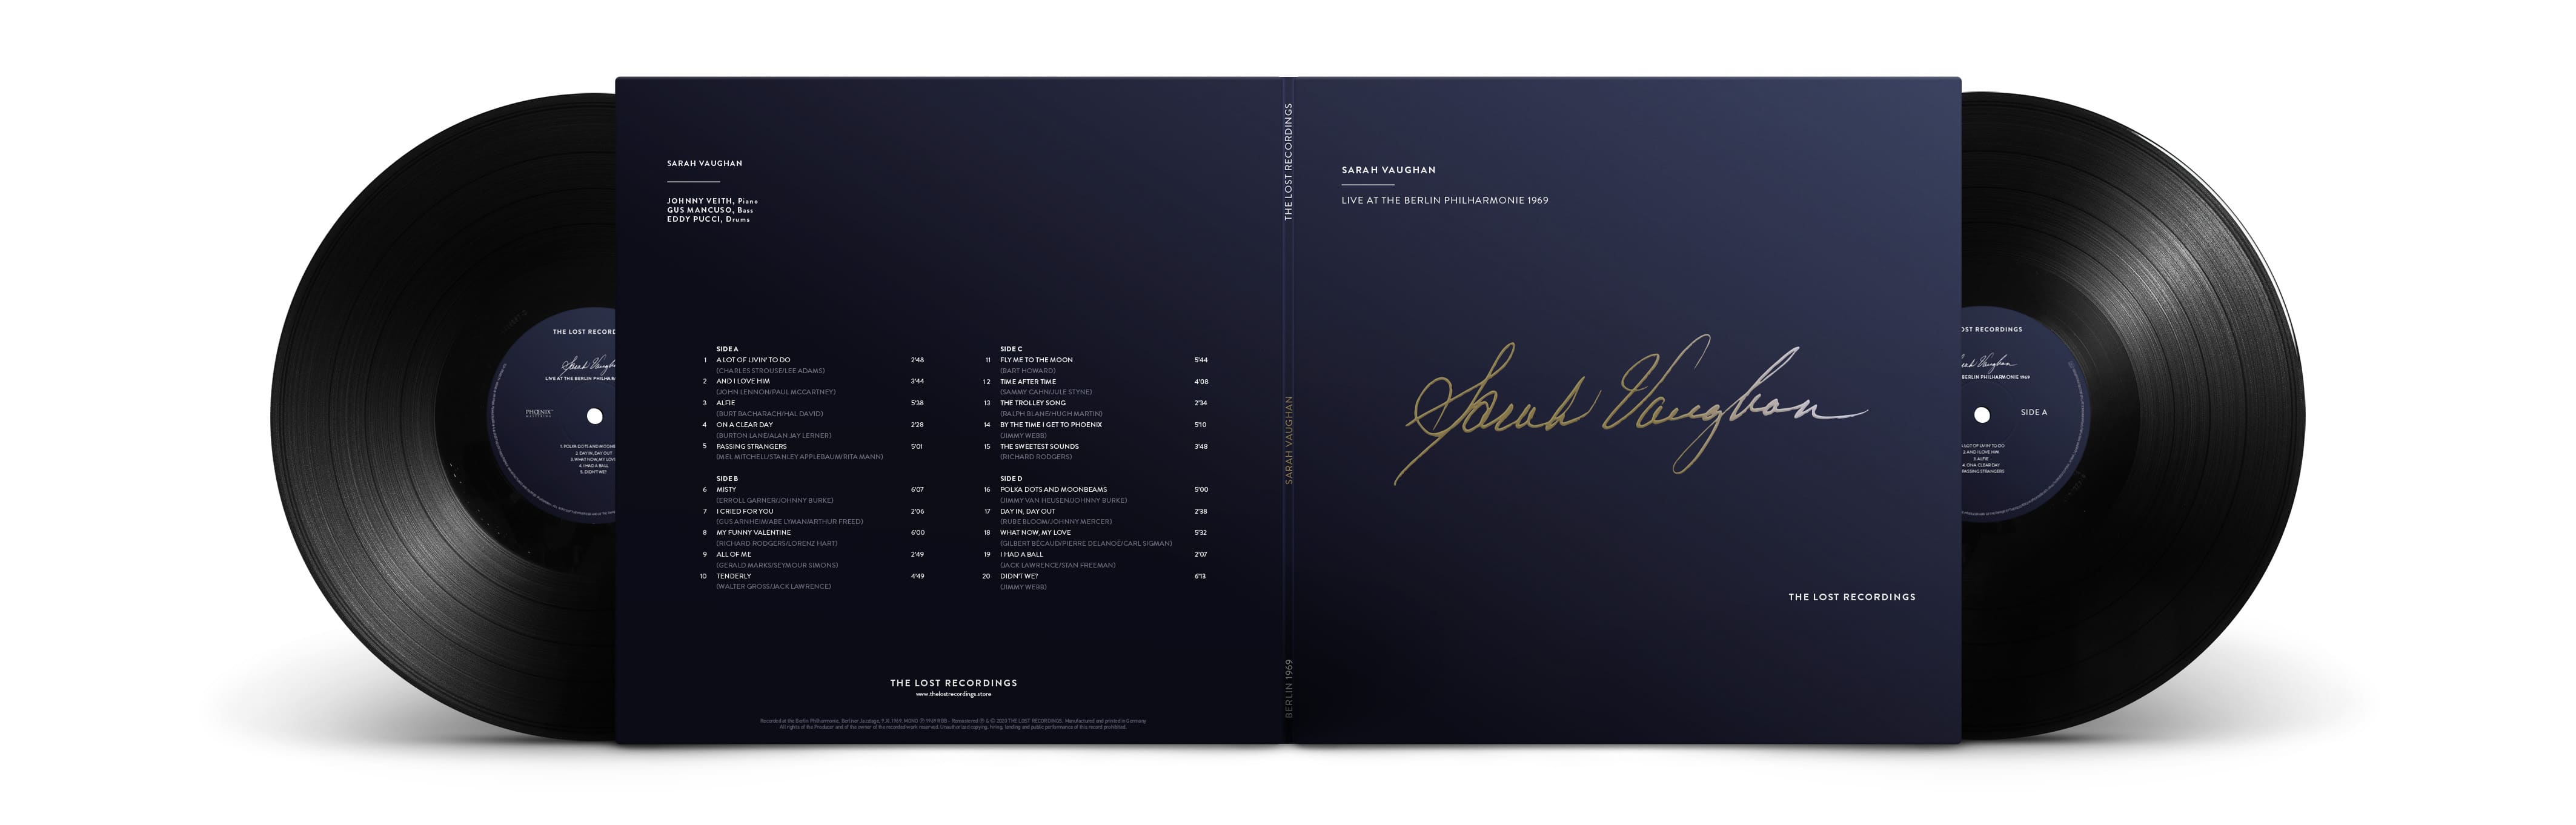 Sarah Vaughan Live at the Berlin Philharmonie 1969 - Double vinyle